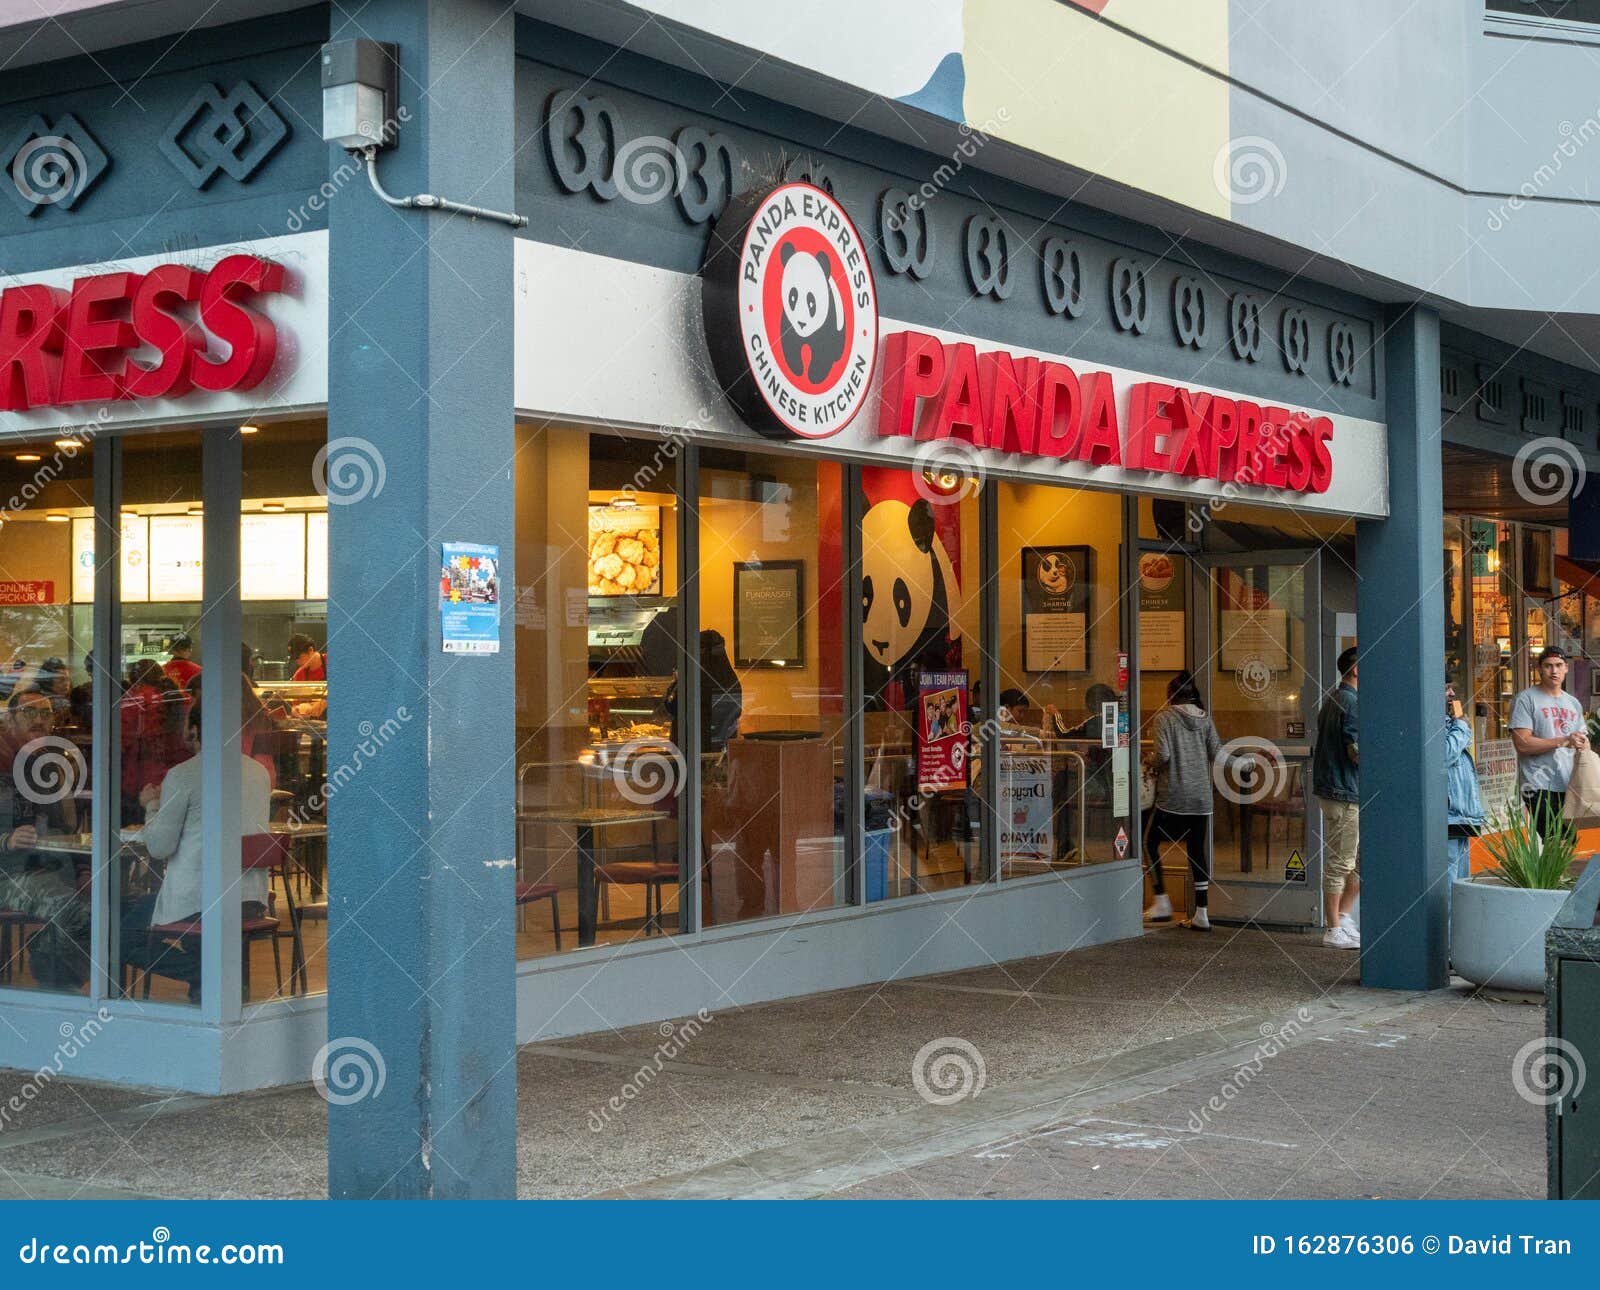 Panda Express Asian Fast Food Location on Street Corner Editorial Photo -  Image of chinese, menu: 162876306